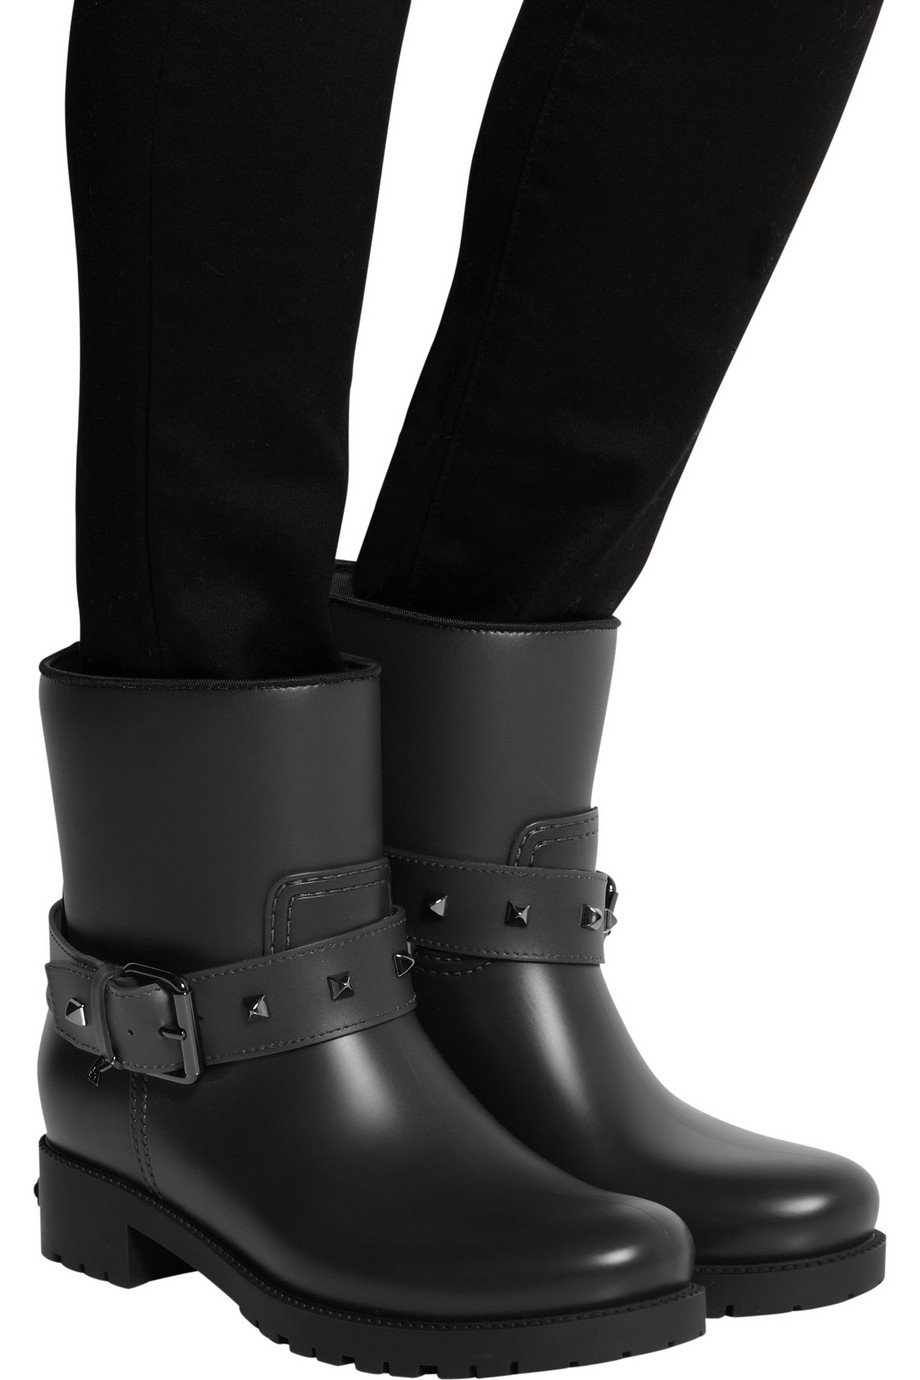 Karl Lagerfeld Rubber Biker Rain Boots in Charcoal (Gray) - Lyst